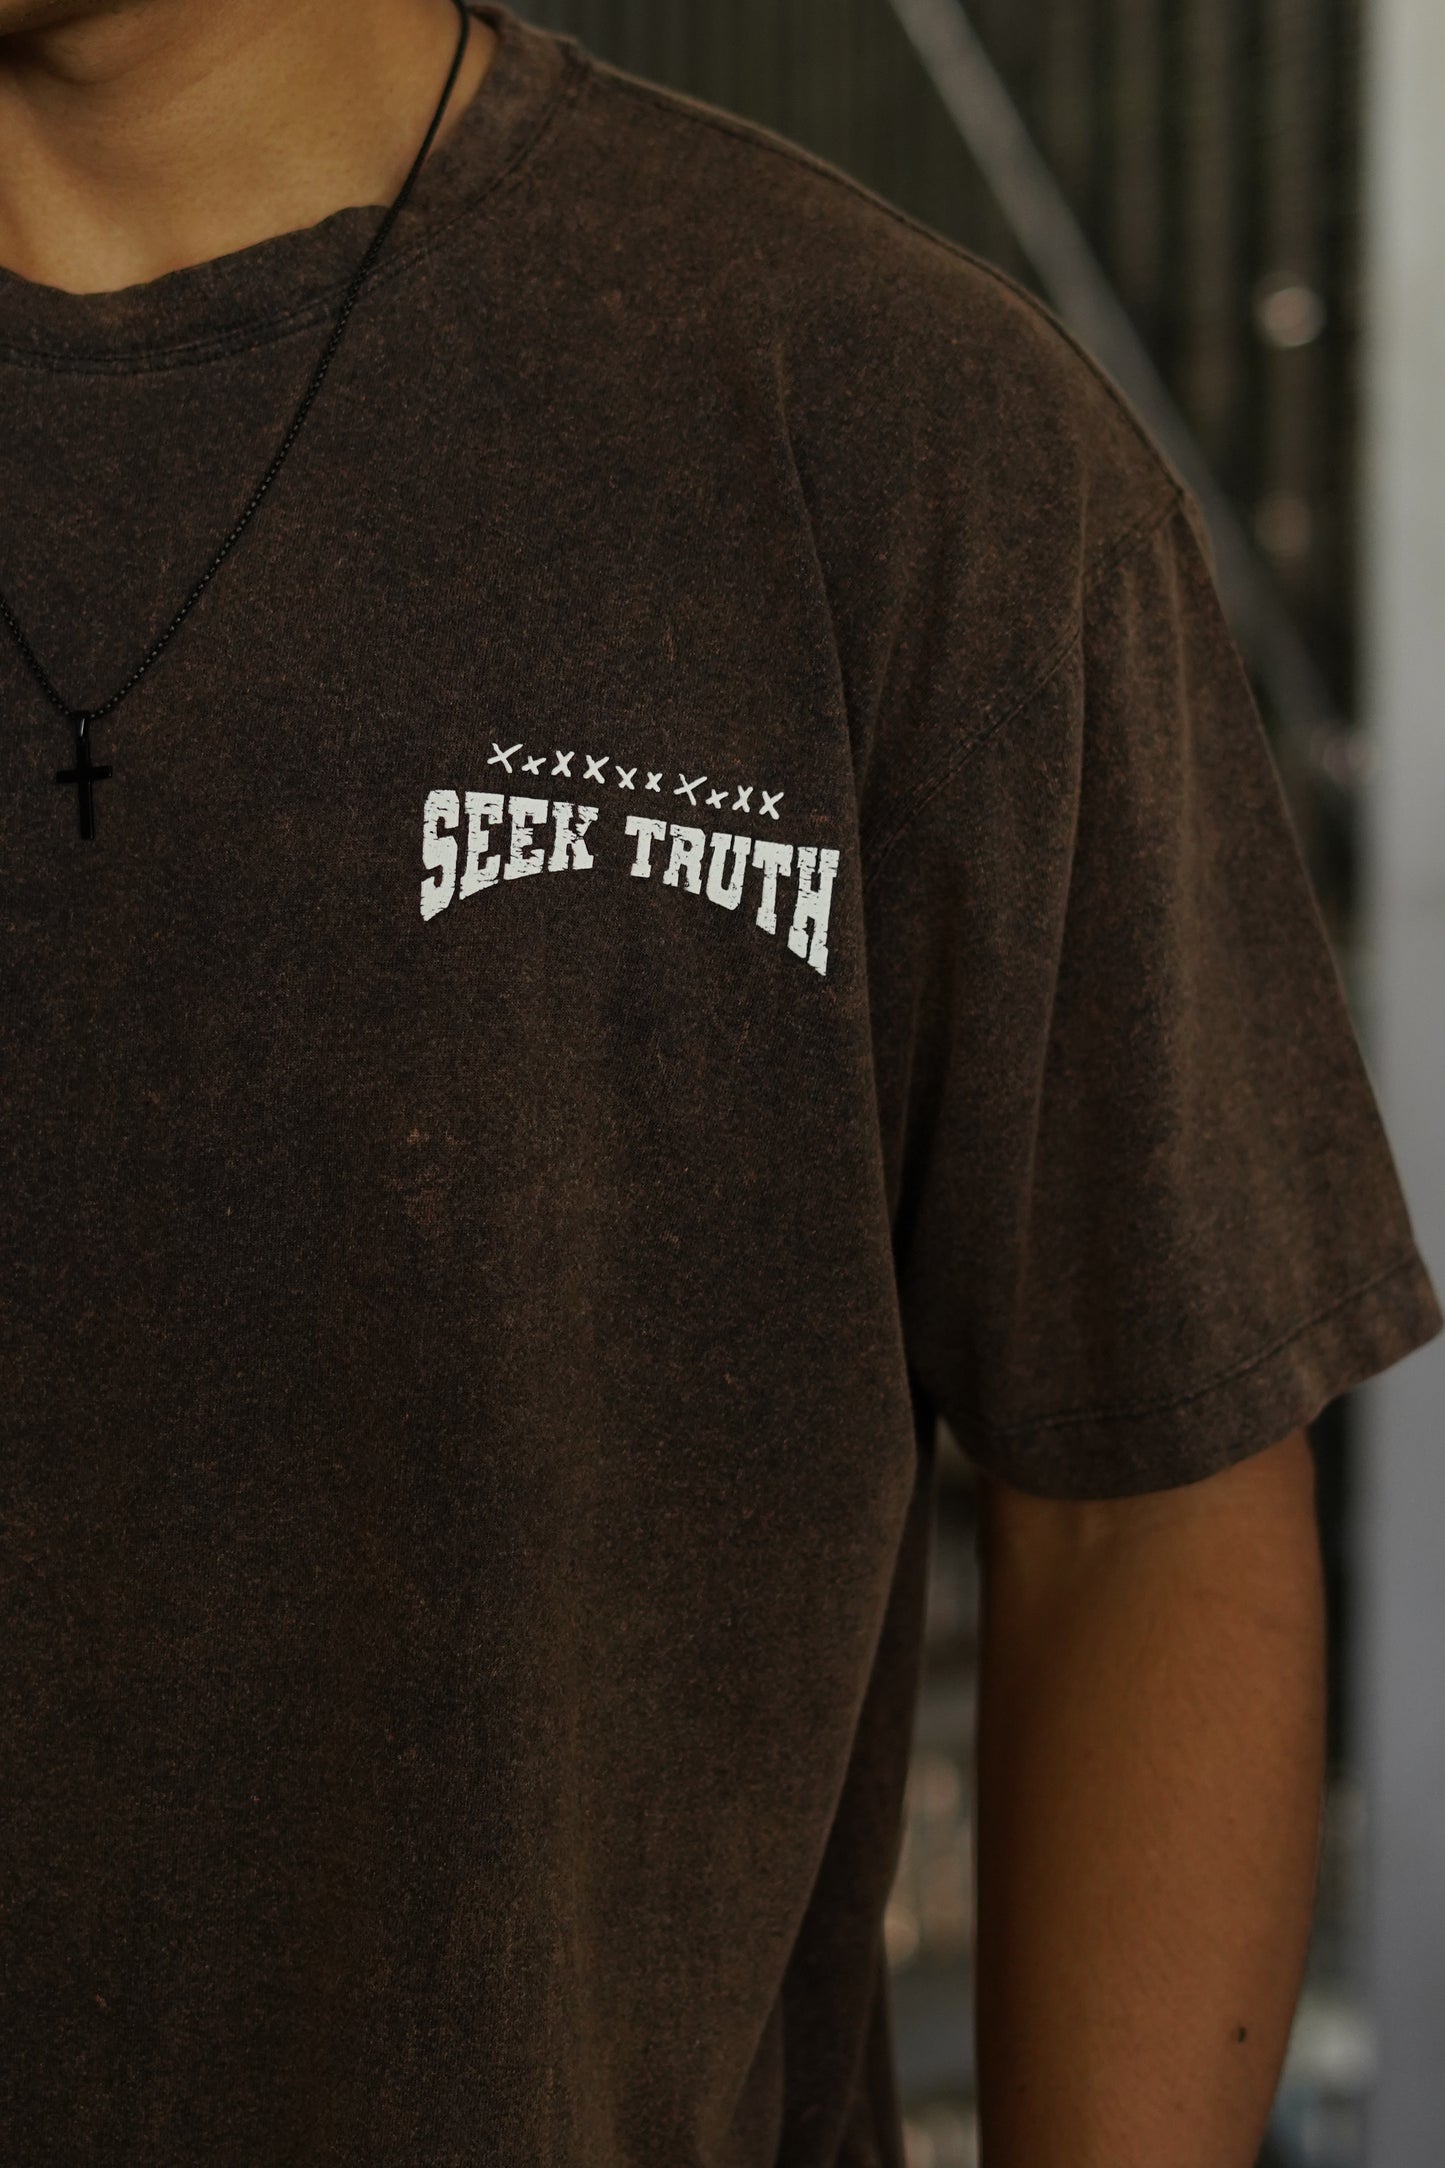 'Seek Truth'